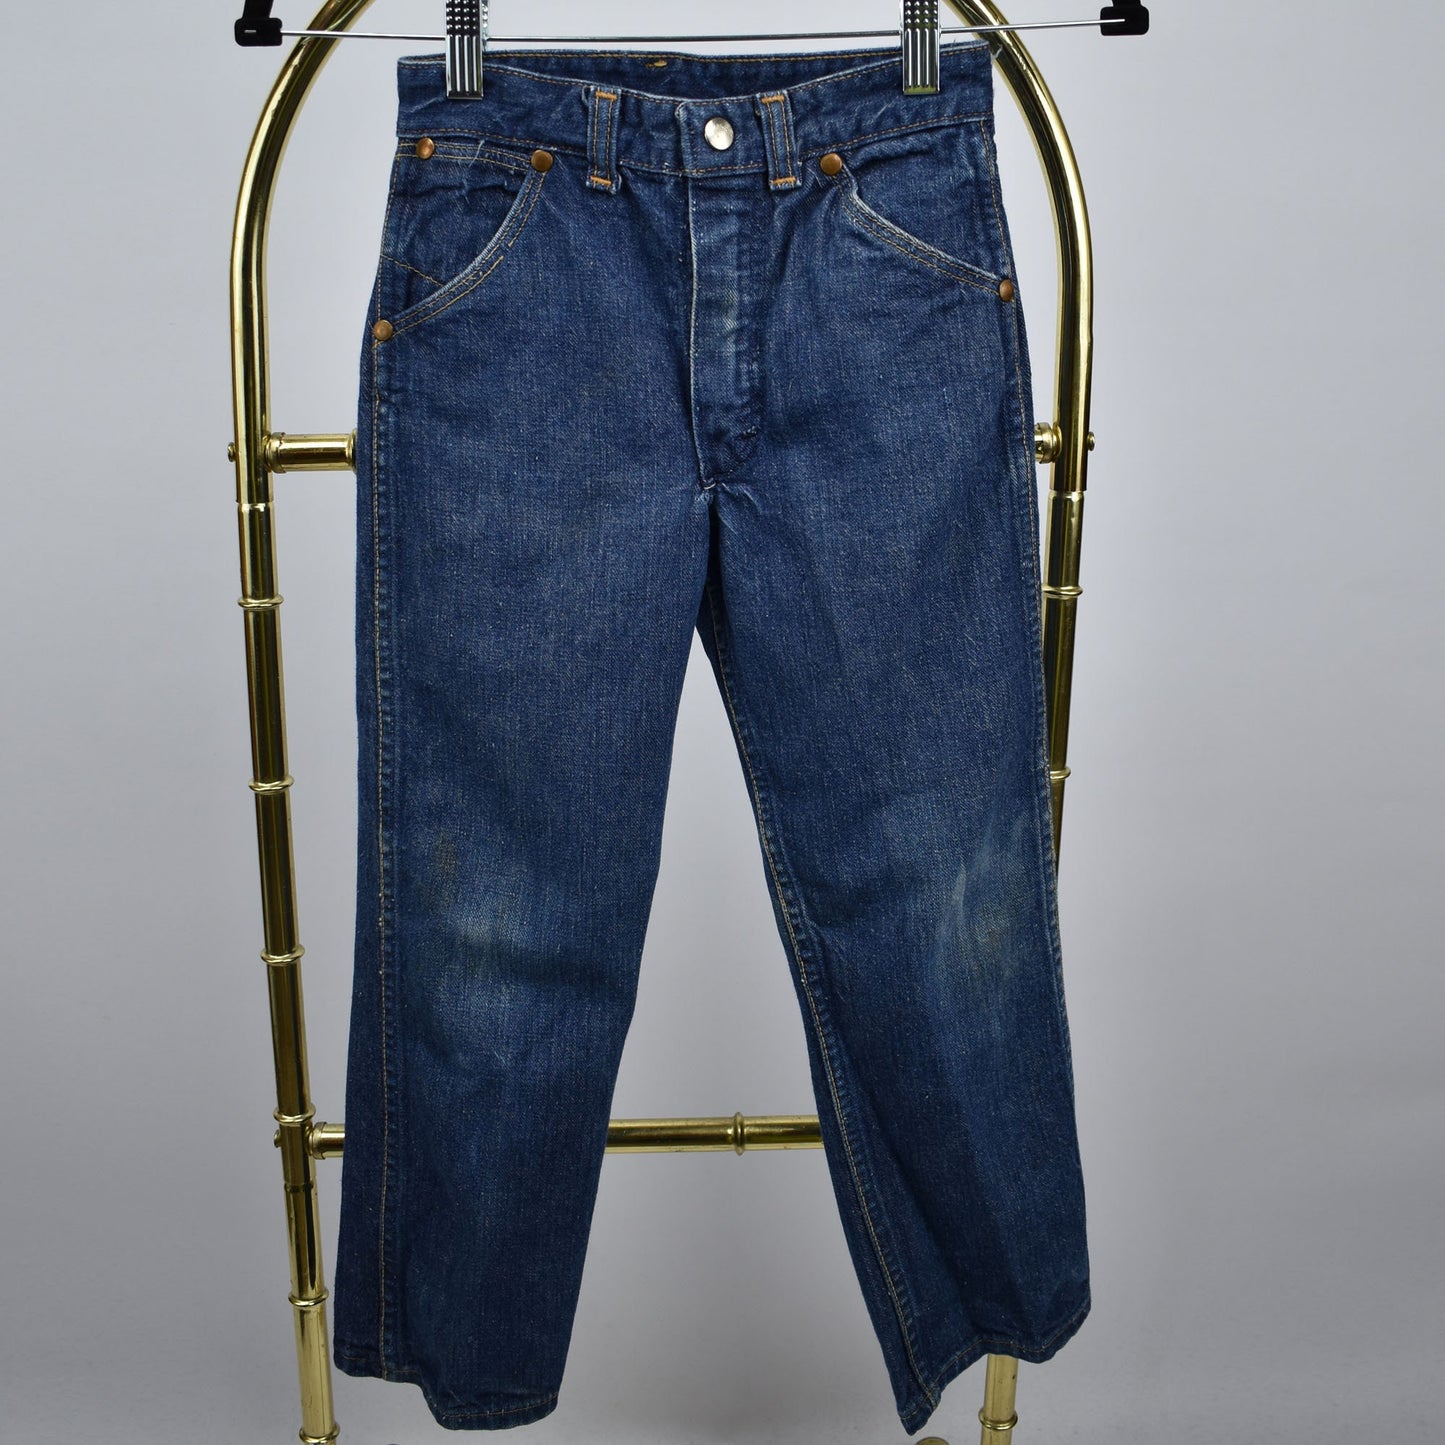 Vintage Kids 1950's Blue Bell Wrangler Jeans with a Gripper Zipper- Size 6